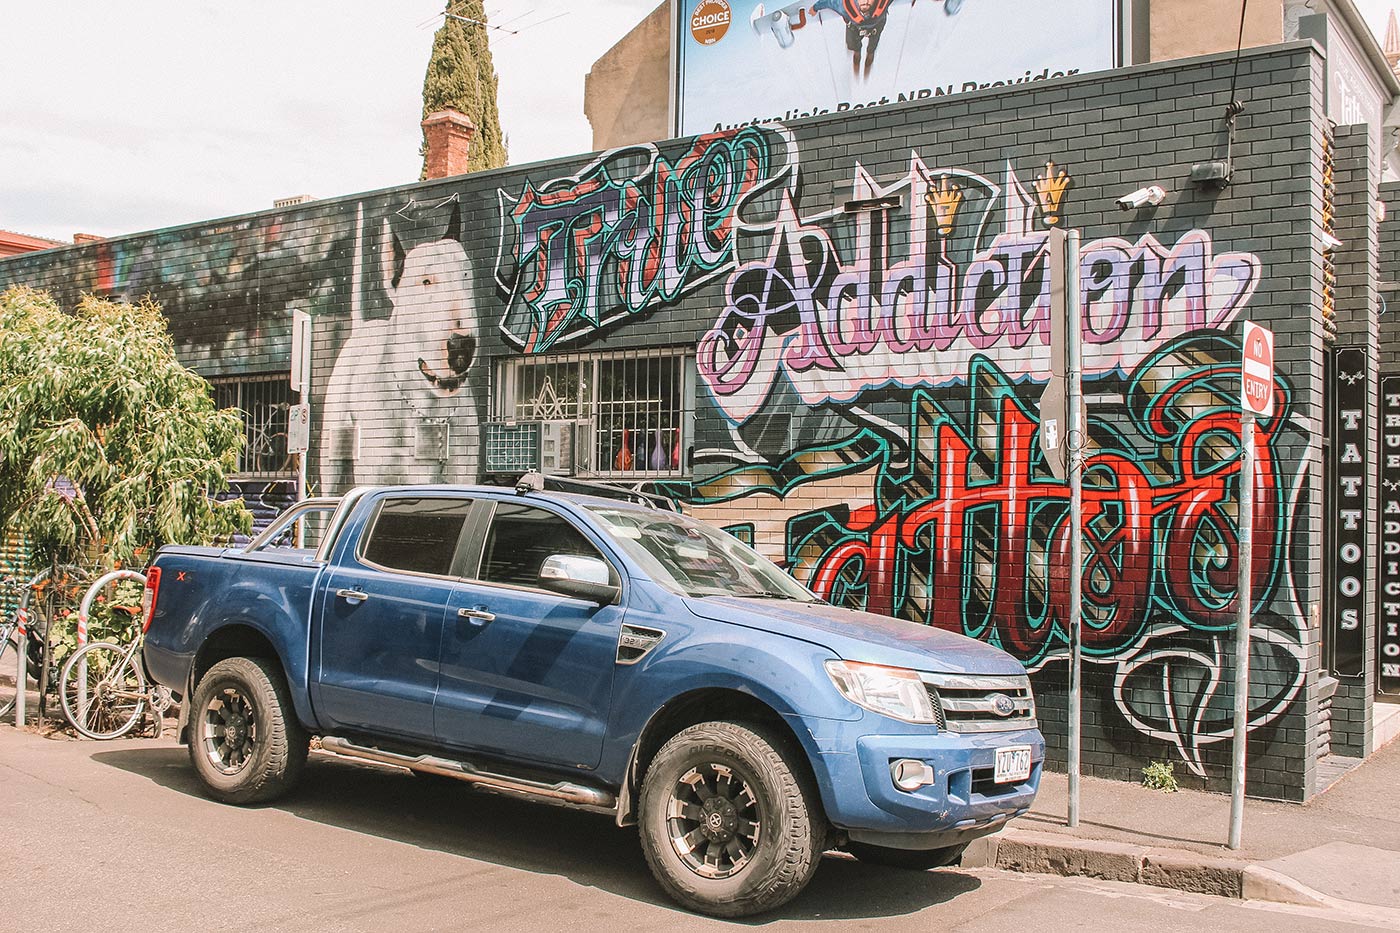 A Tour of Melbourne street art, Australia blog post Fitzroy / Collingwood